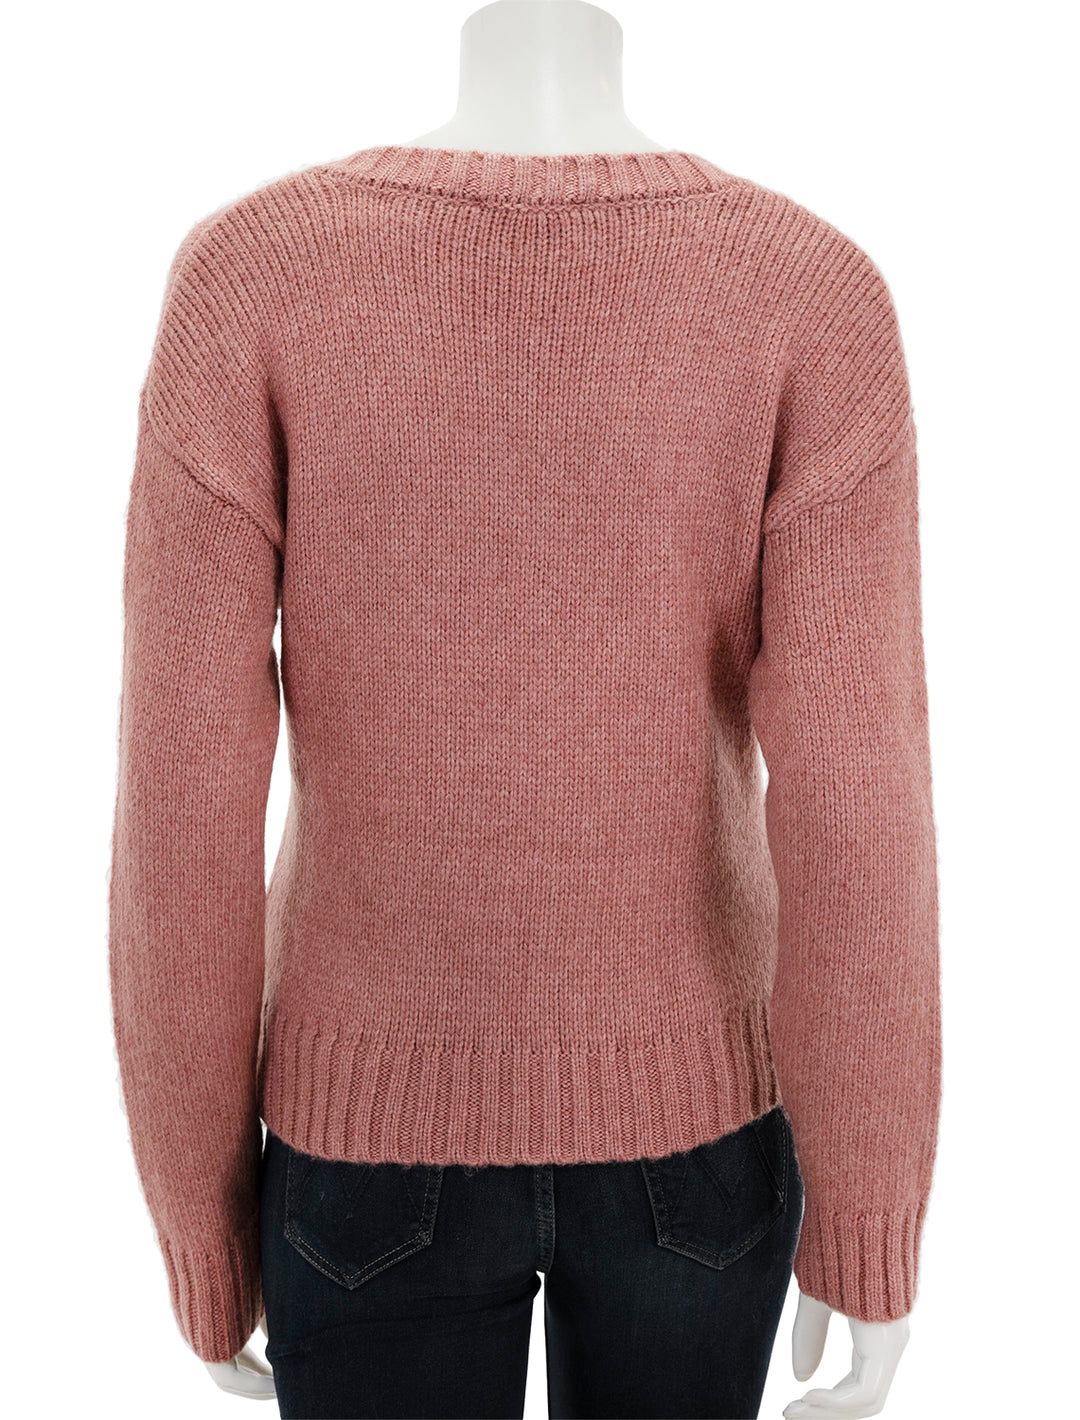 Back view of Steve Madden's houston sweater in rose.